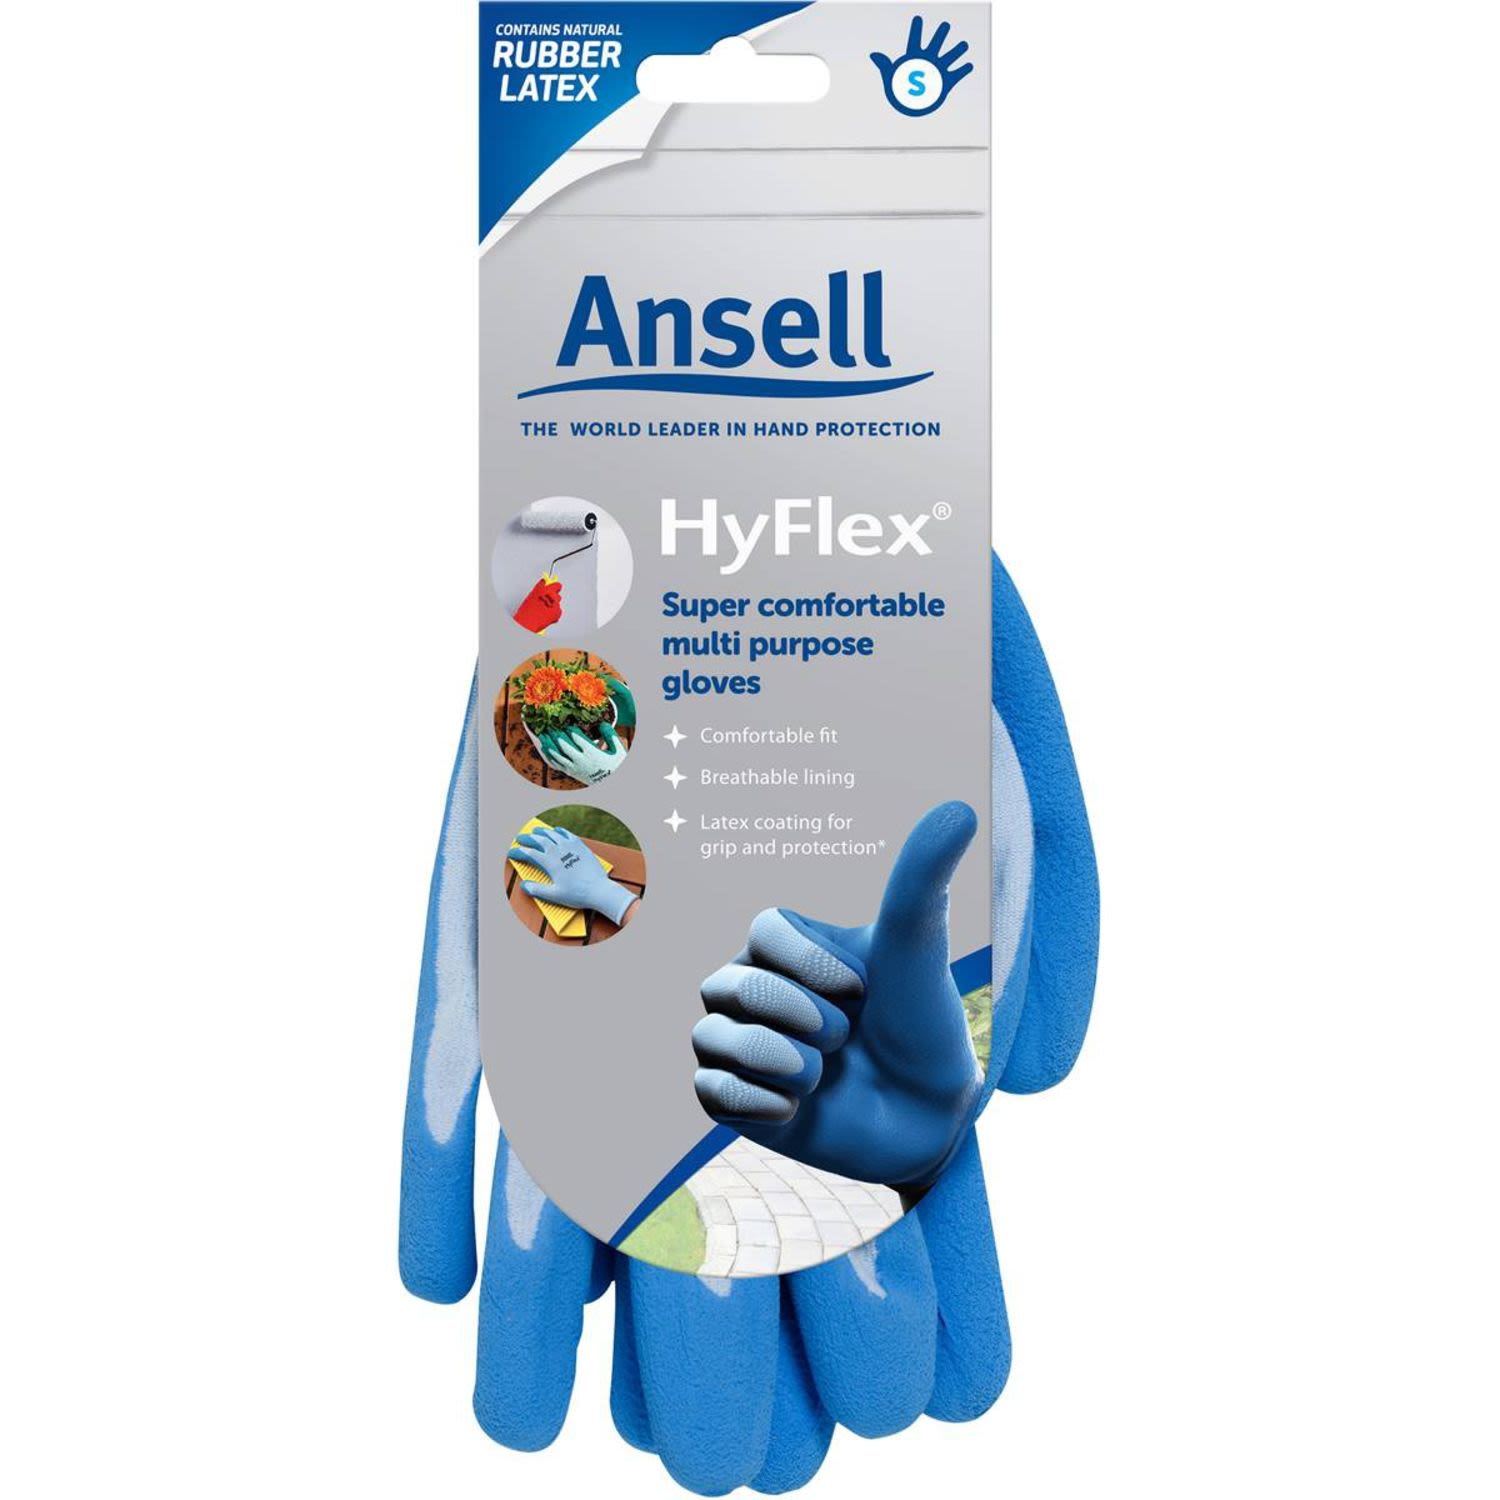 Ansell Glove Hyflex Small, 1 Each